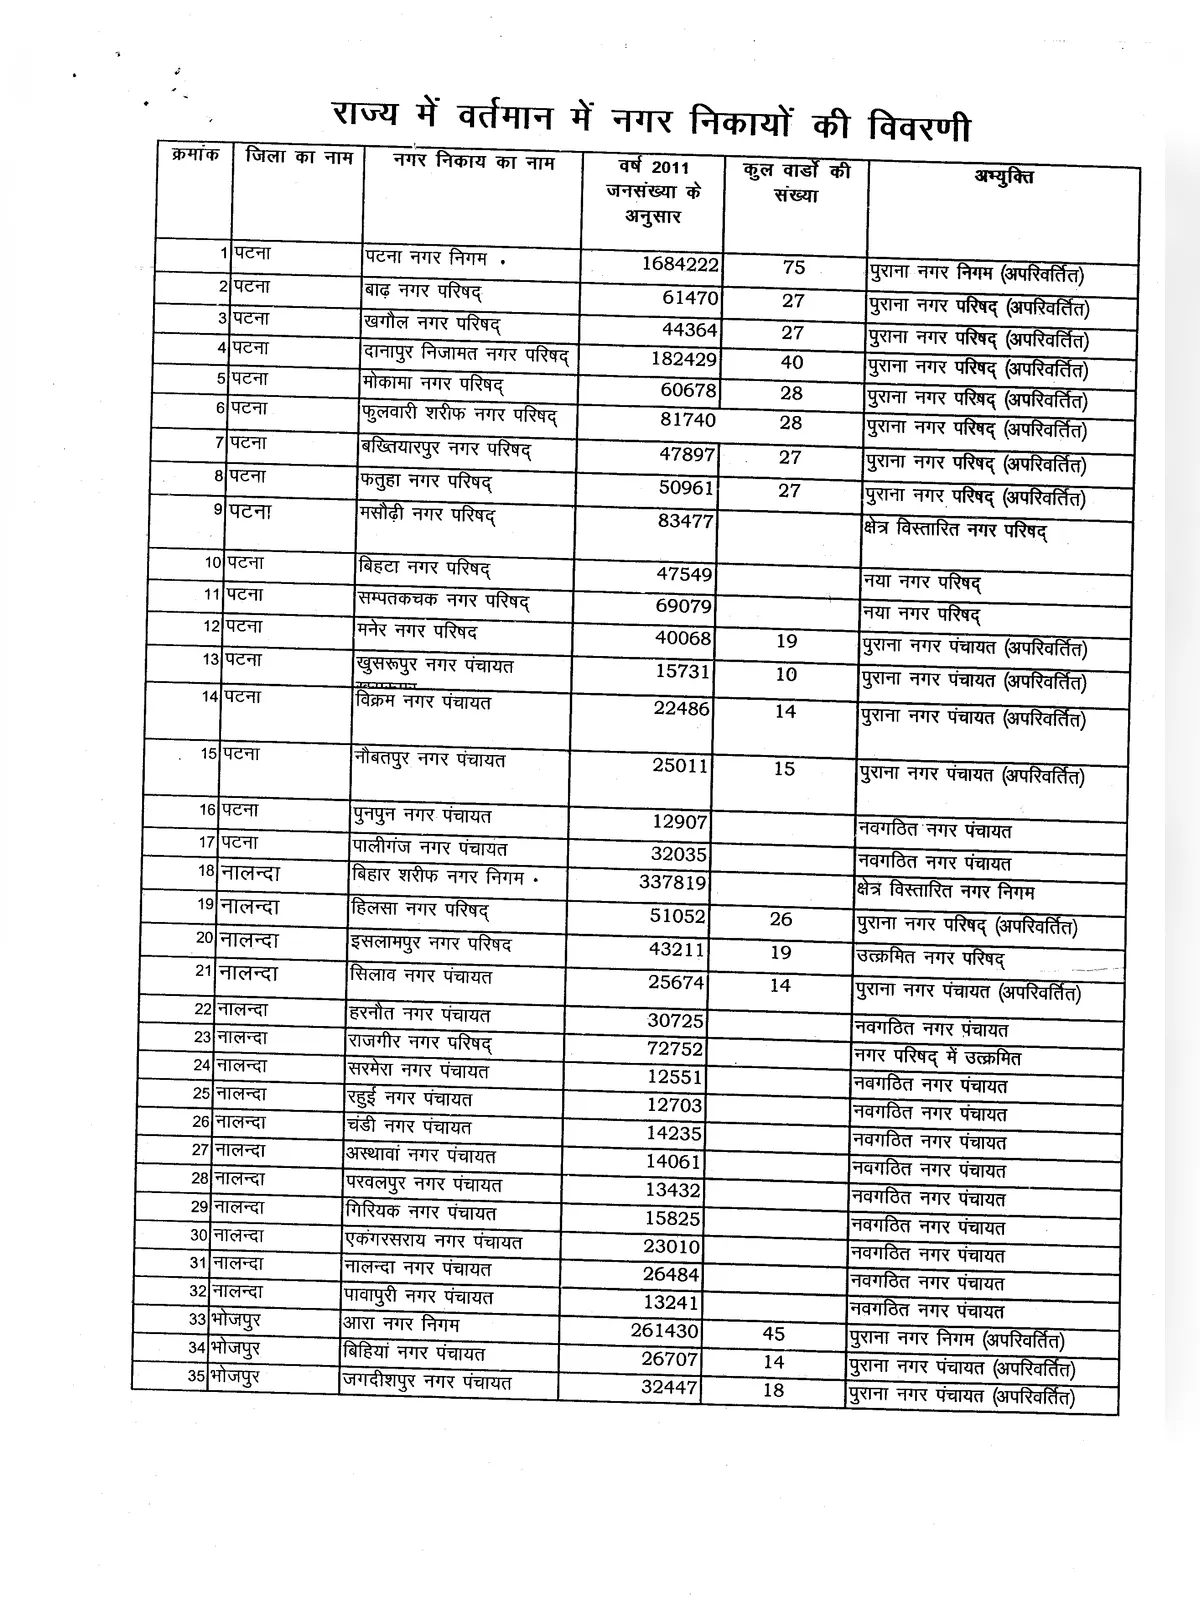 Urban Local Bodies List Bihar